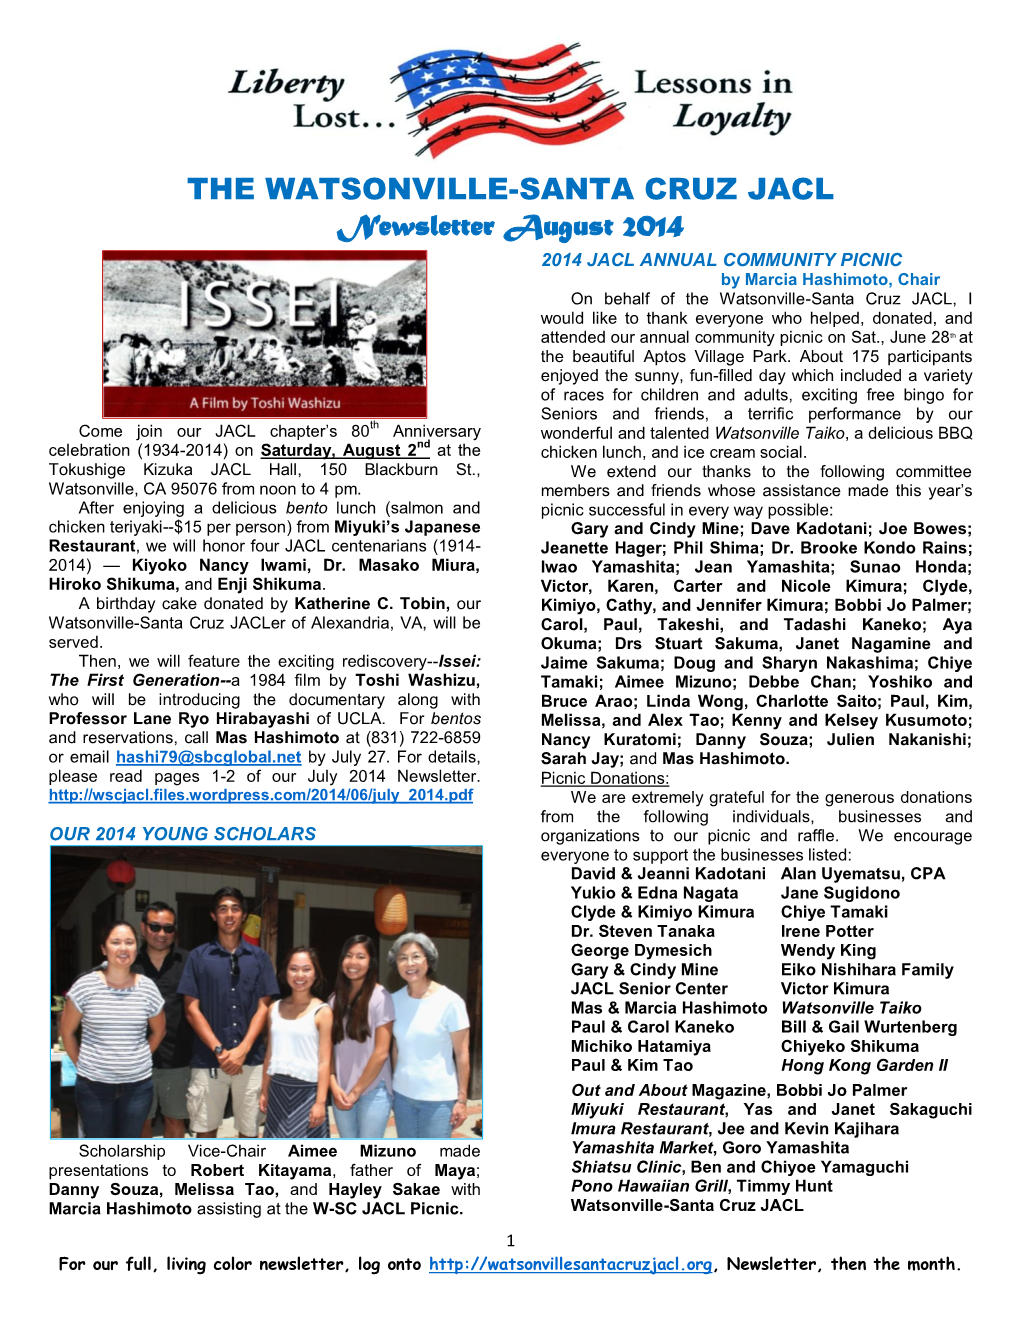 THE WATSONVILLE-SANTA CRUZ JACL Newsletter August 2014